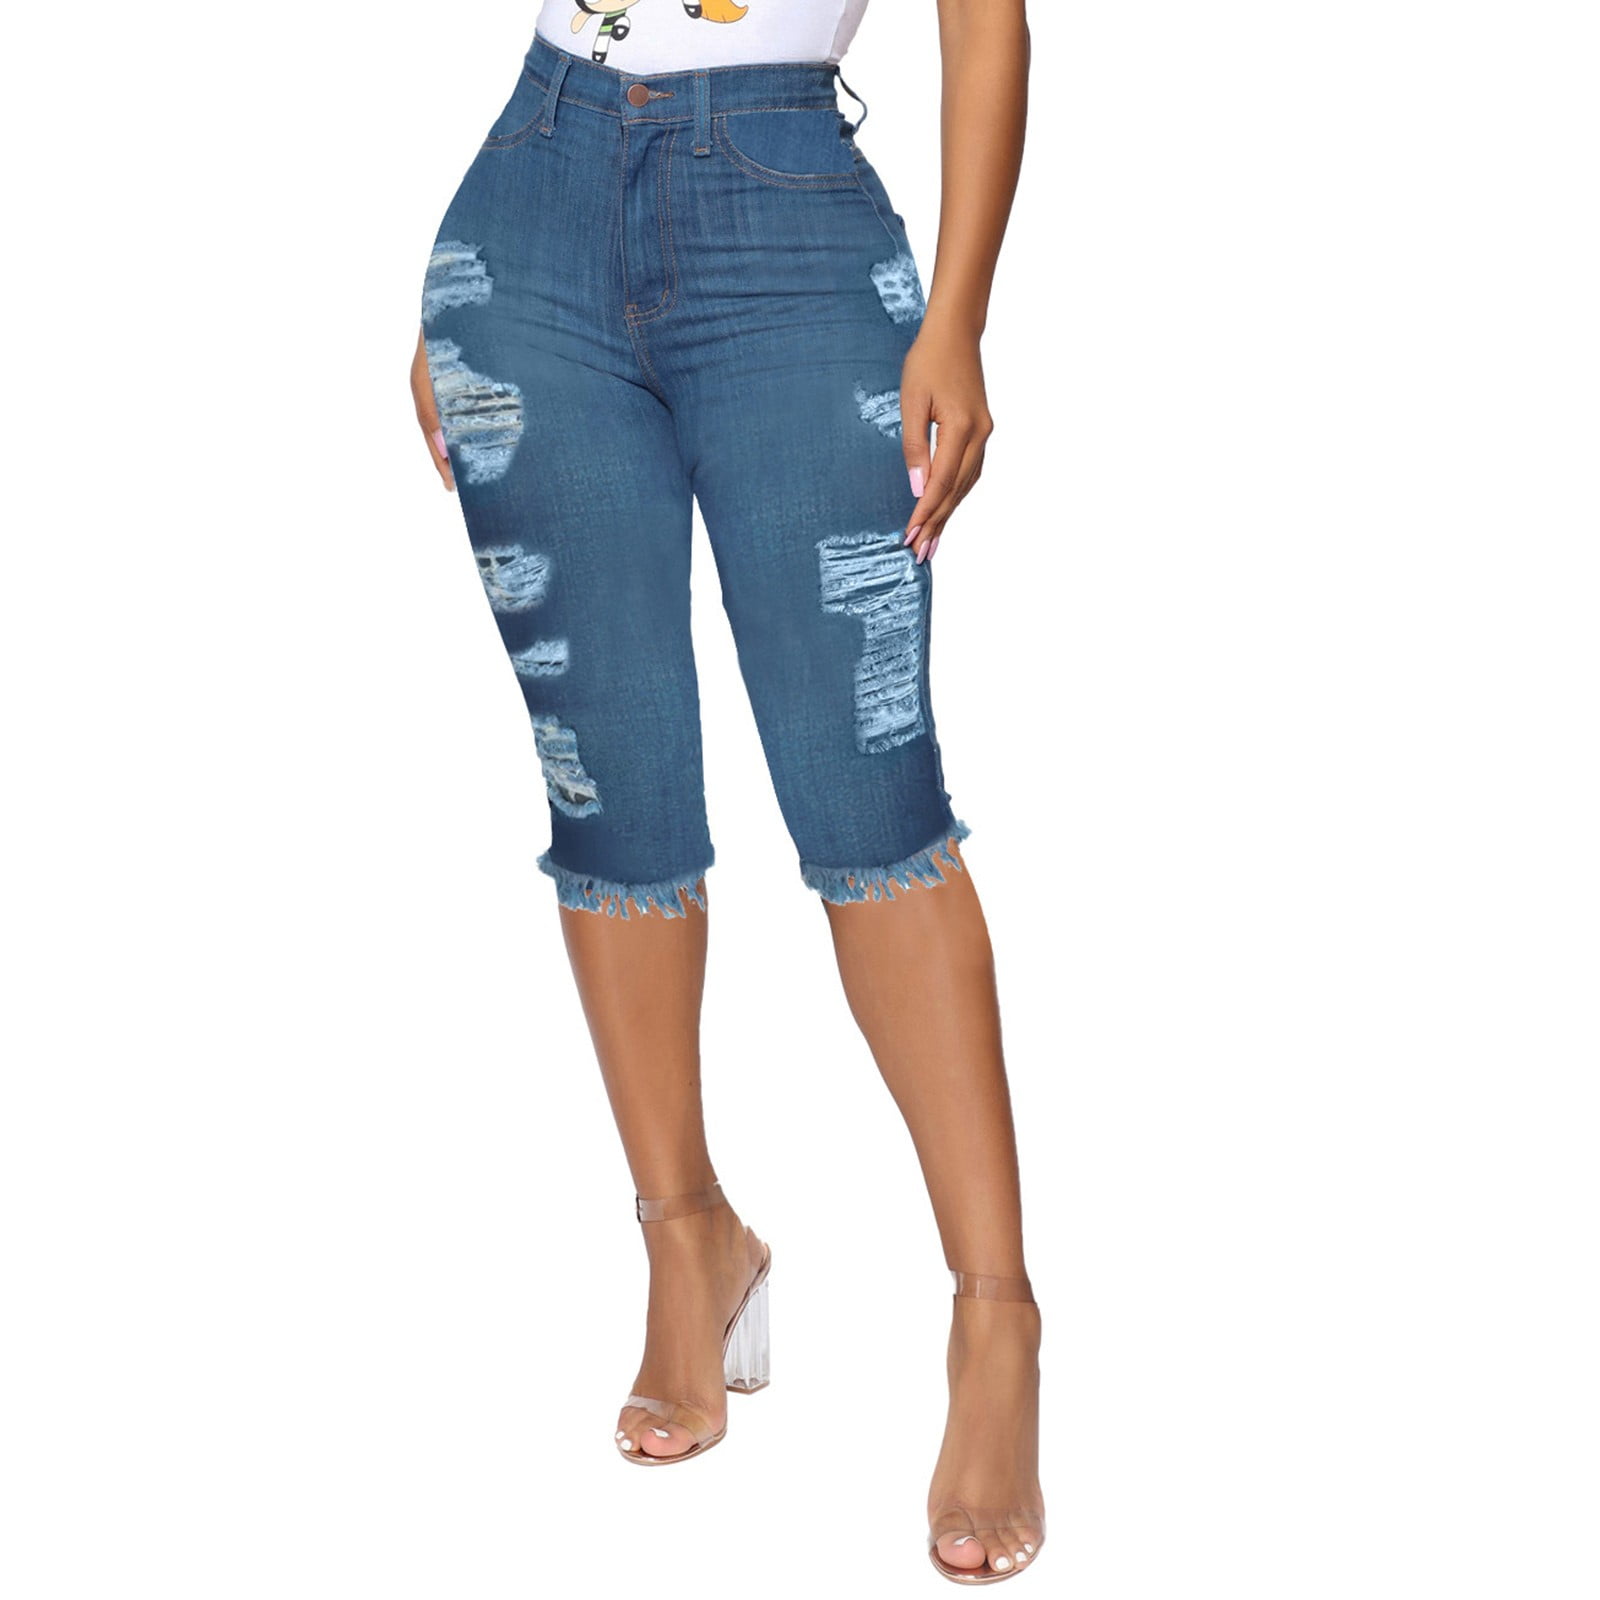 Buy Ripped Jeans Summer Knee Length Jeans at LeStyleParfait Kenya